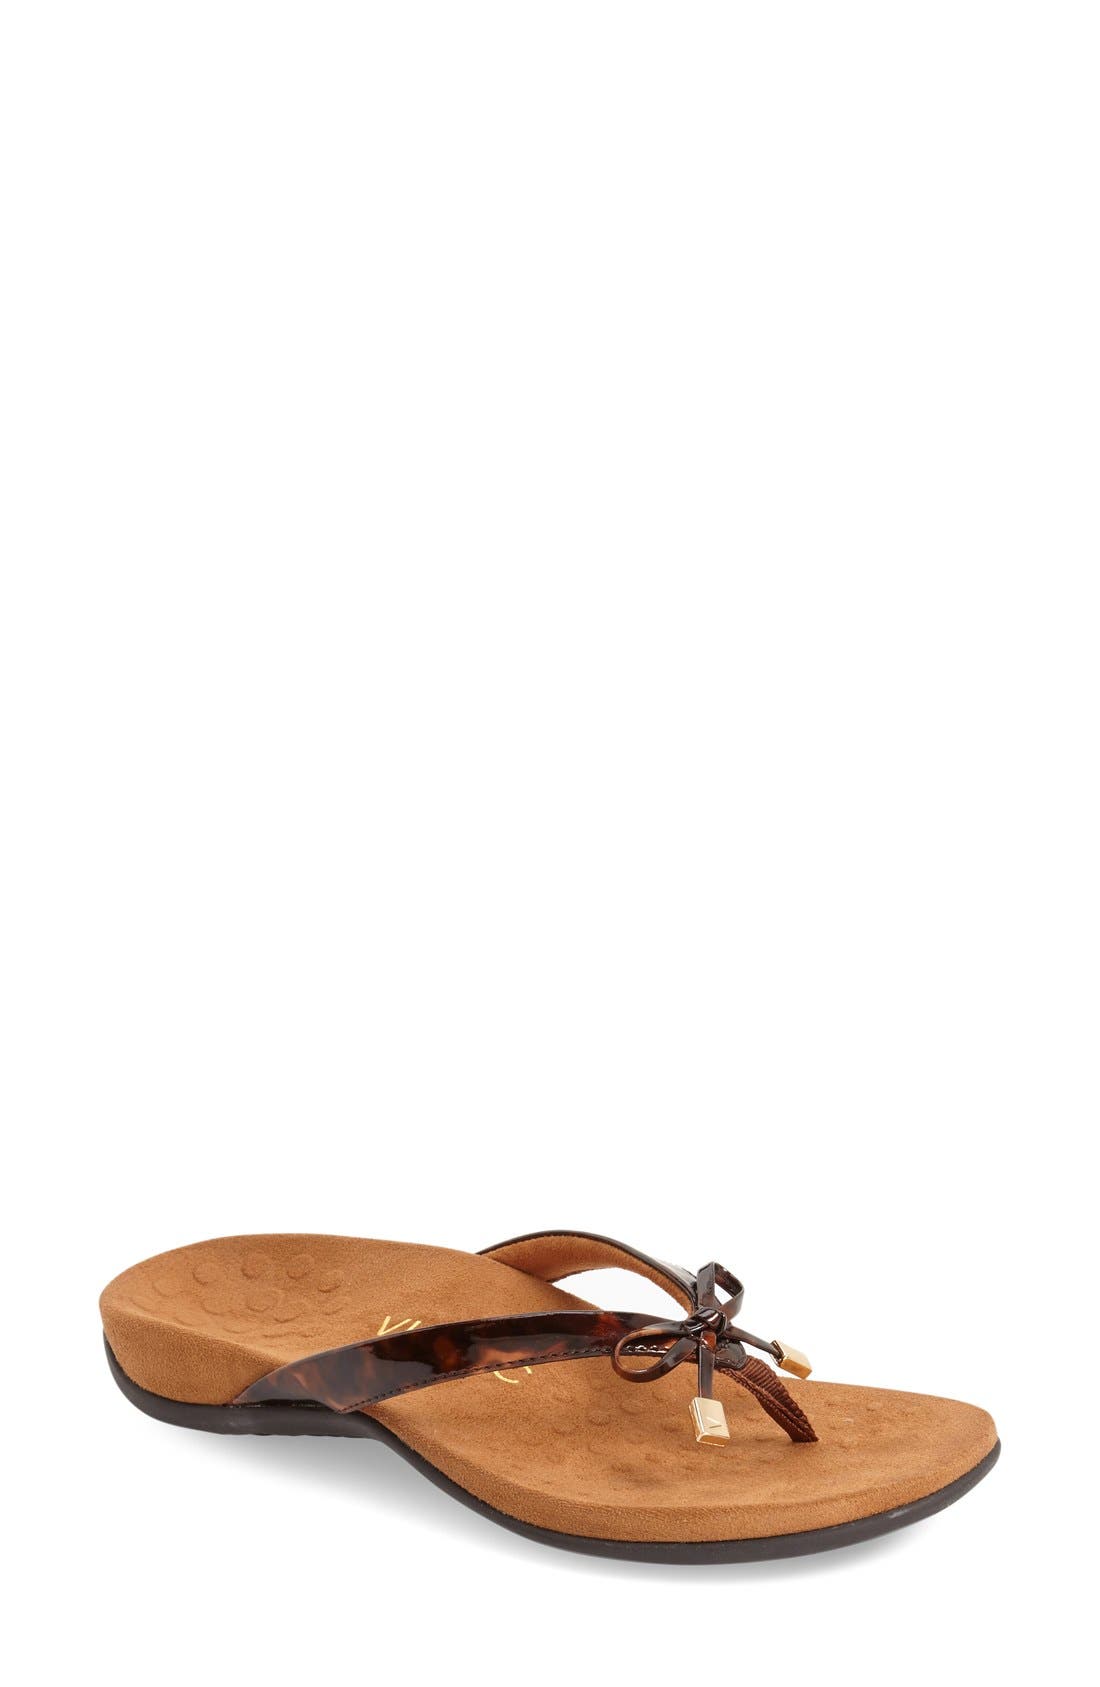 vionic sandals narrow width